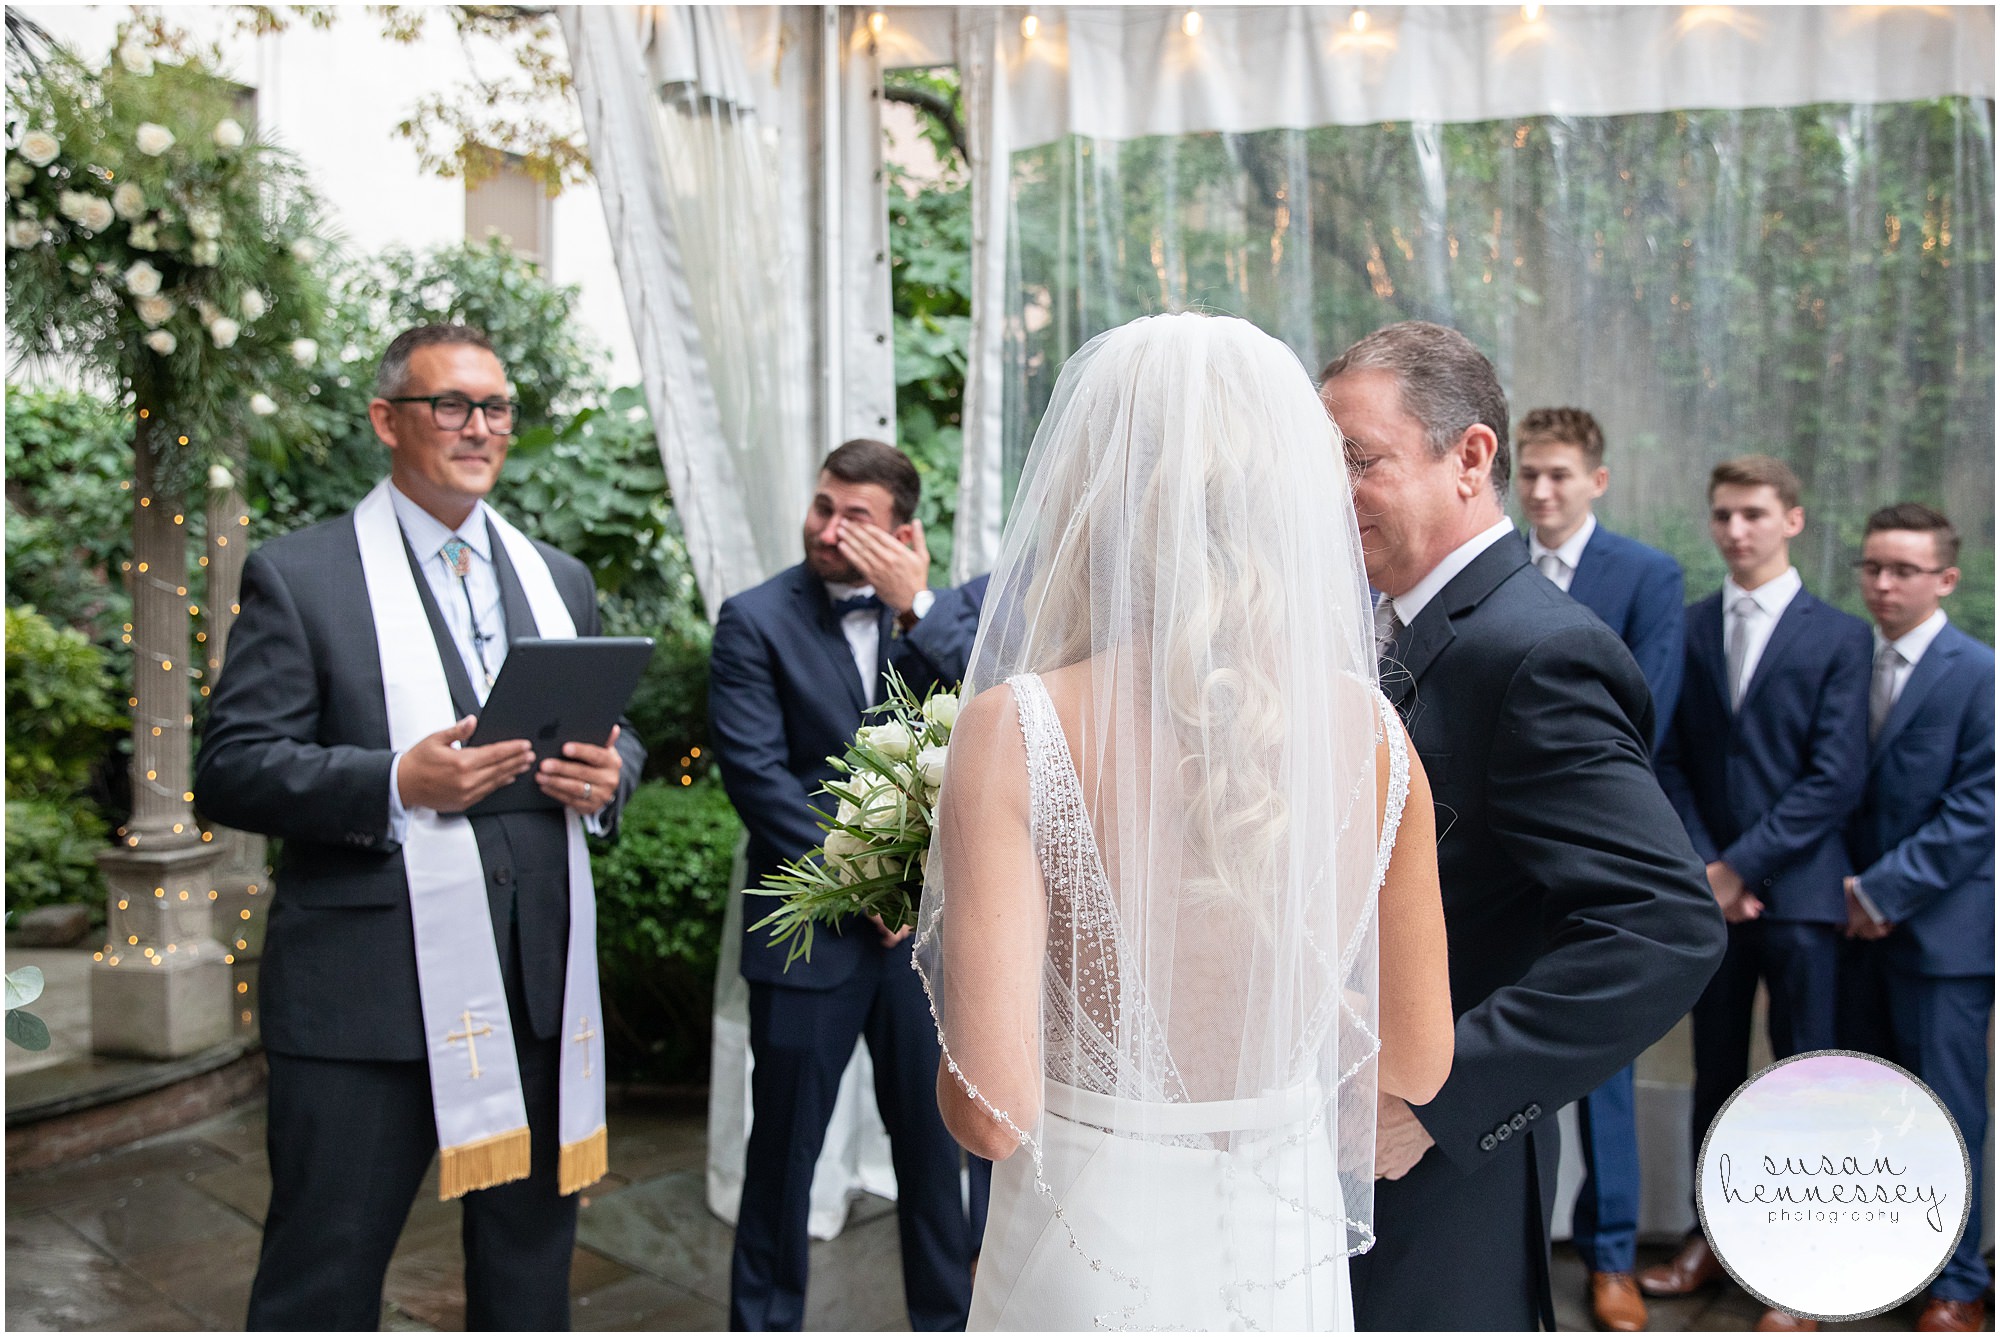 Susan Hennessey Photography Best of 2020 Weddings - Philadelphia microwedding at Morris House Hotel